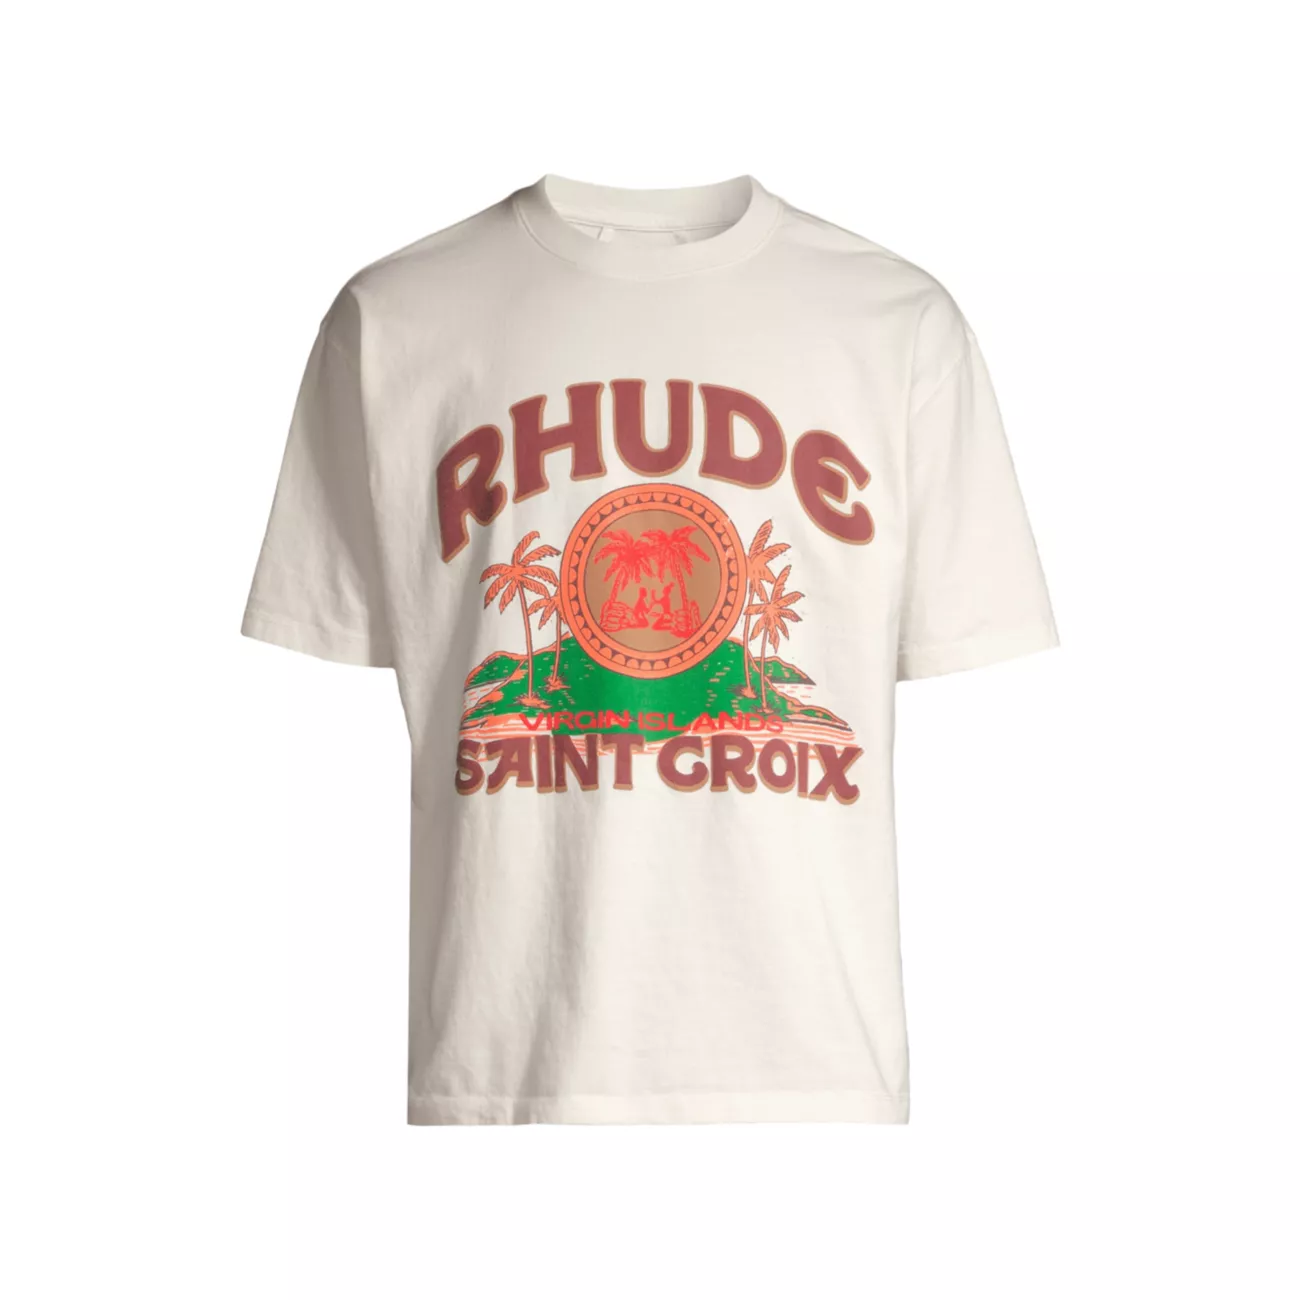 Хлопковая футболка с логотипом Saint Croix R H U D E